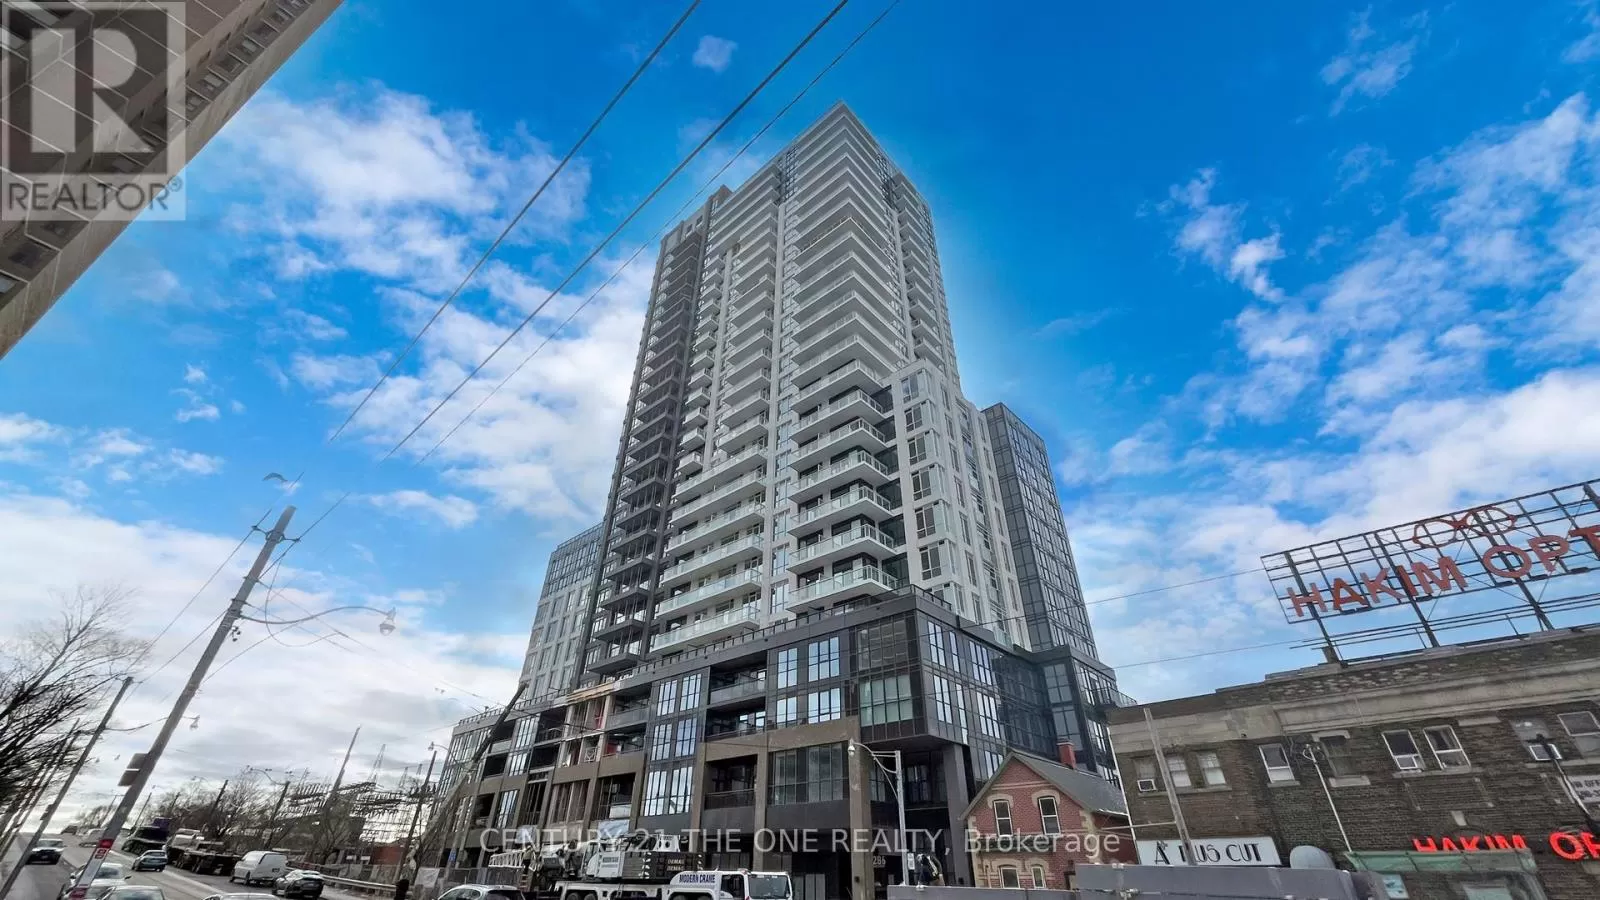 Apartment for rent: 1703 - 286 Main Street, Toronto, Ontario M4C 4X4